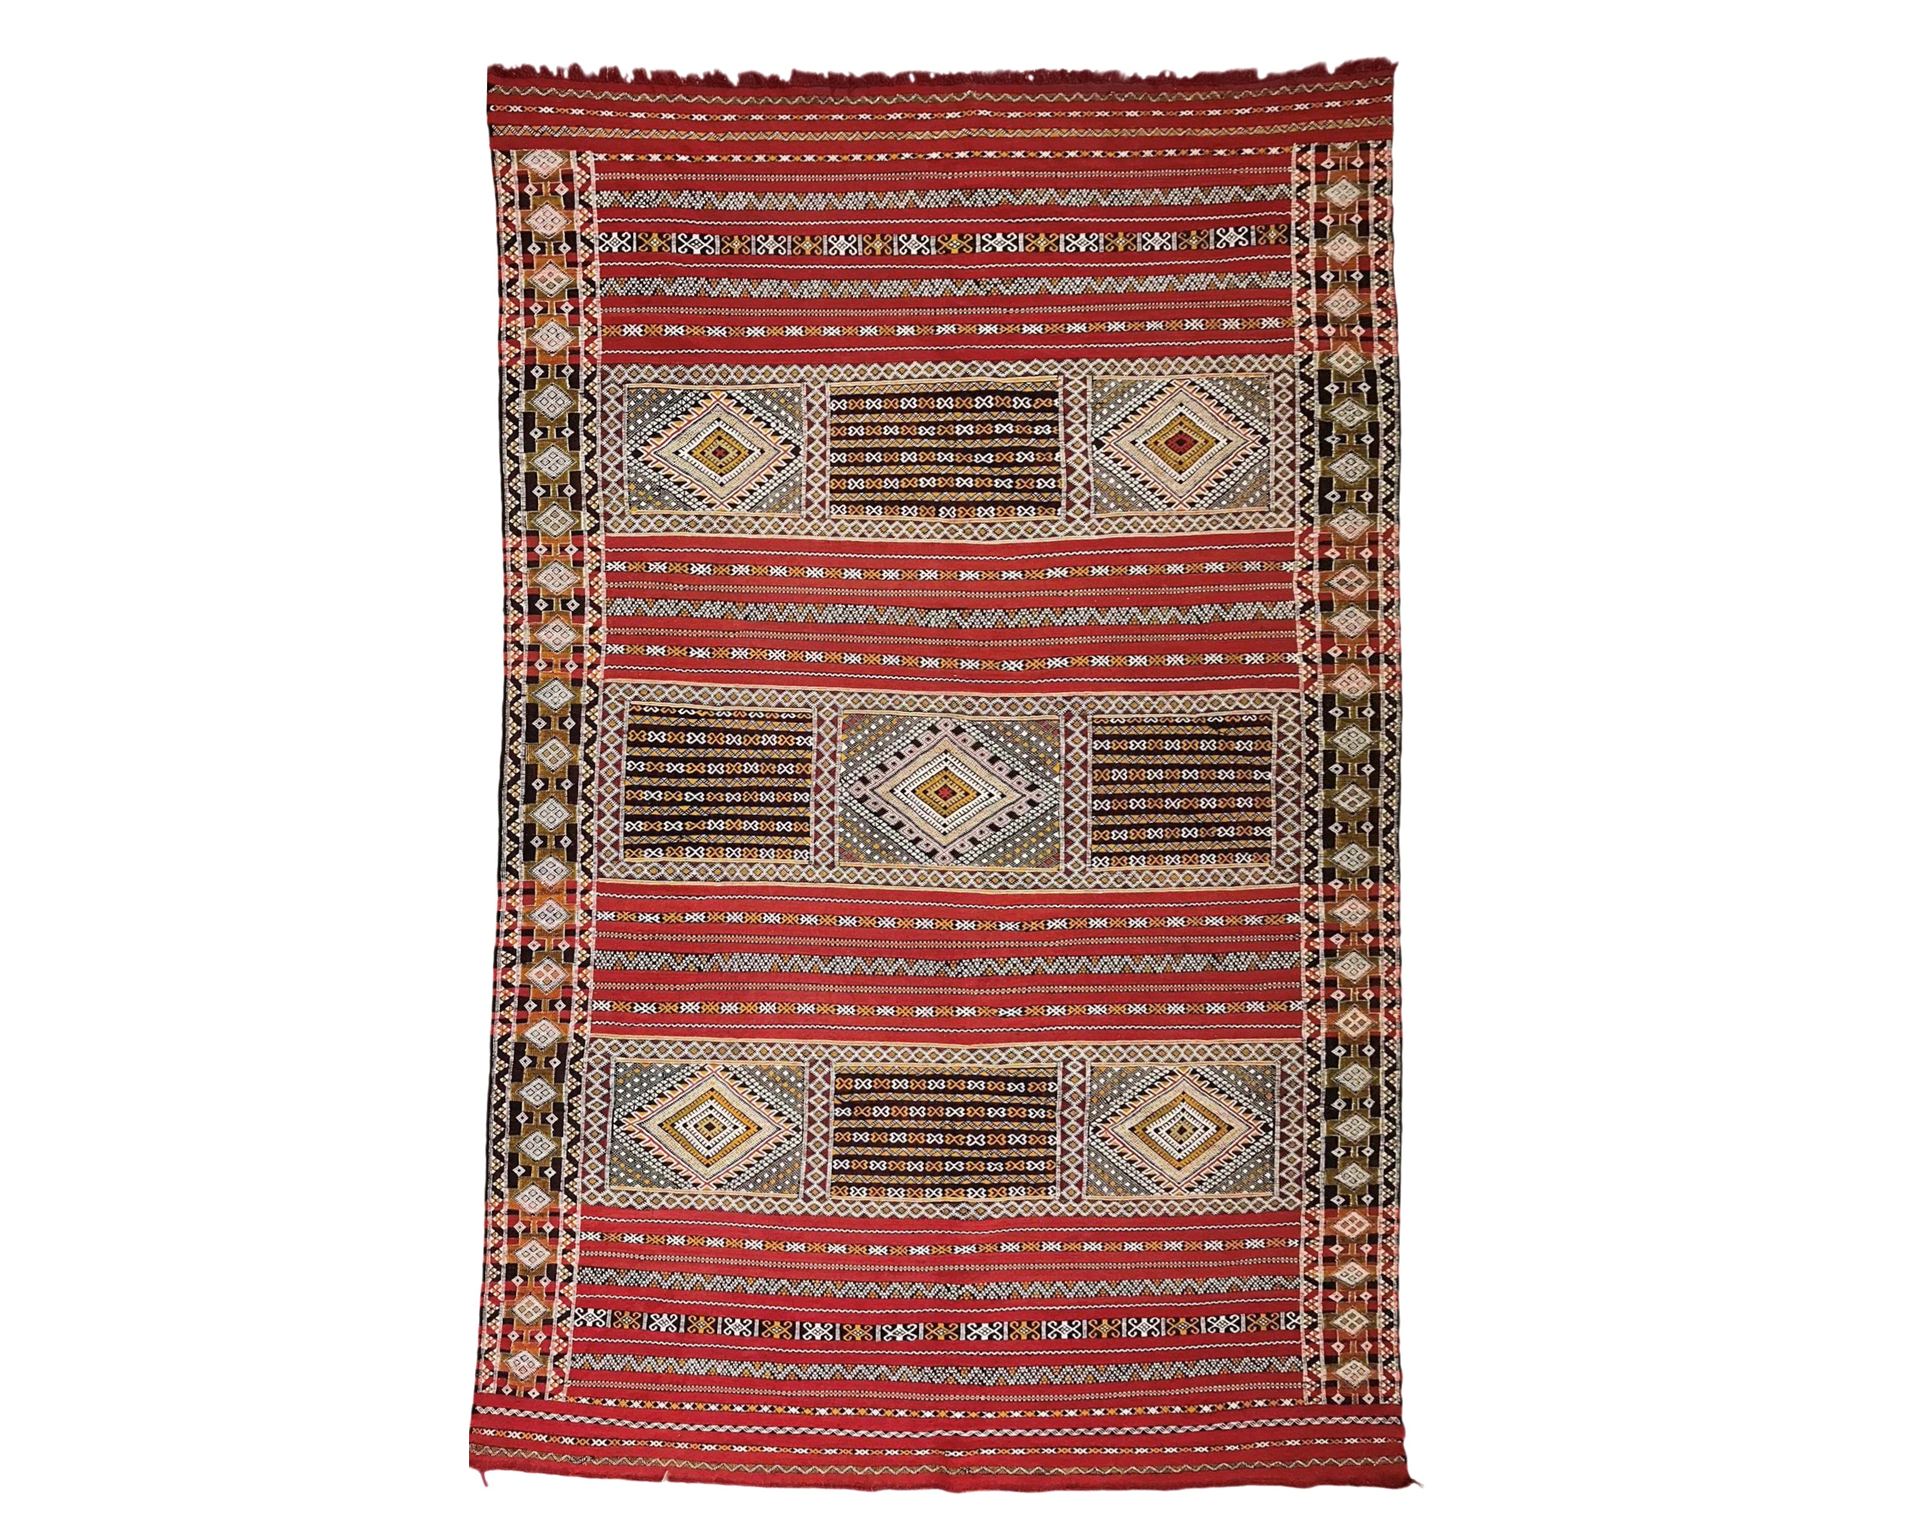 Vintage Handmade Kilim Rug from Morocco